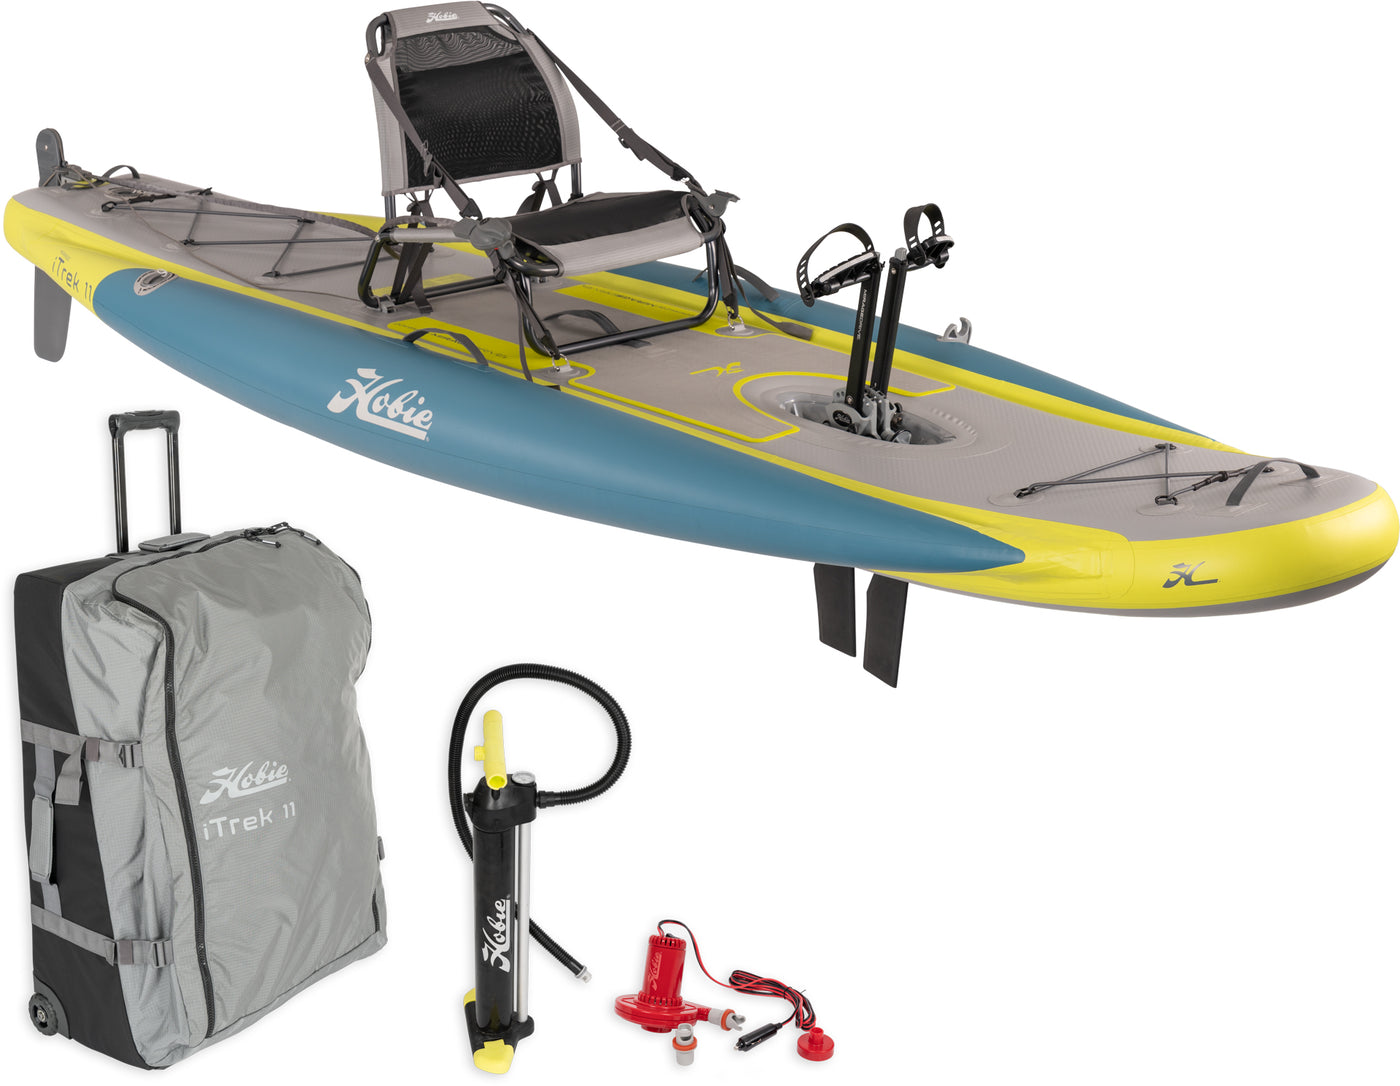 Hobie Mirage iTrek 11 Inflatable Pedal Kayak - Slate Blue